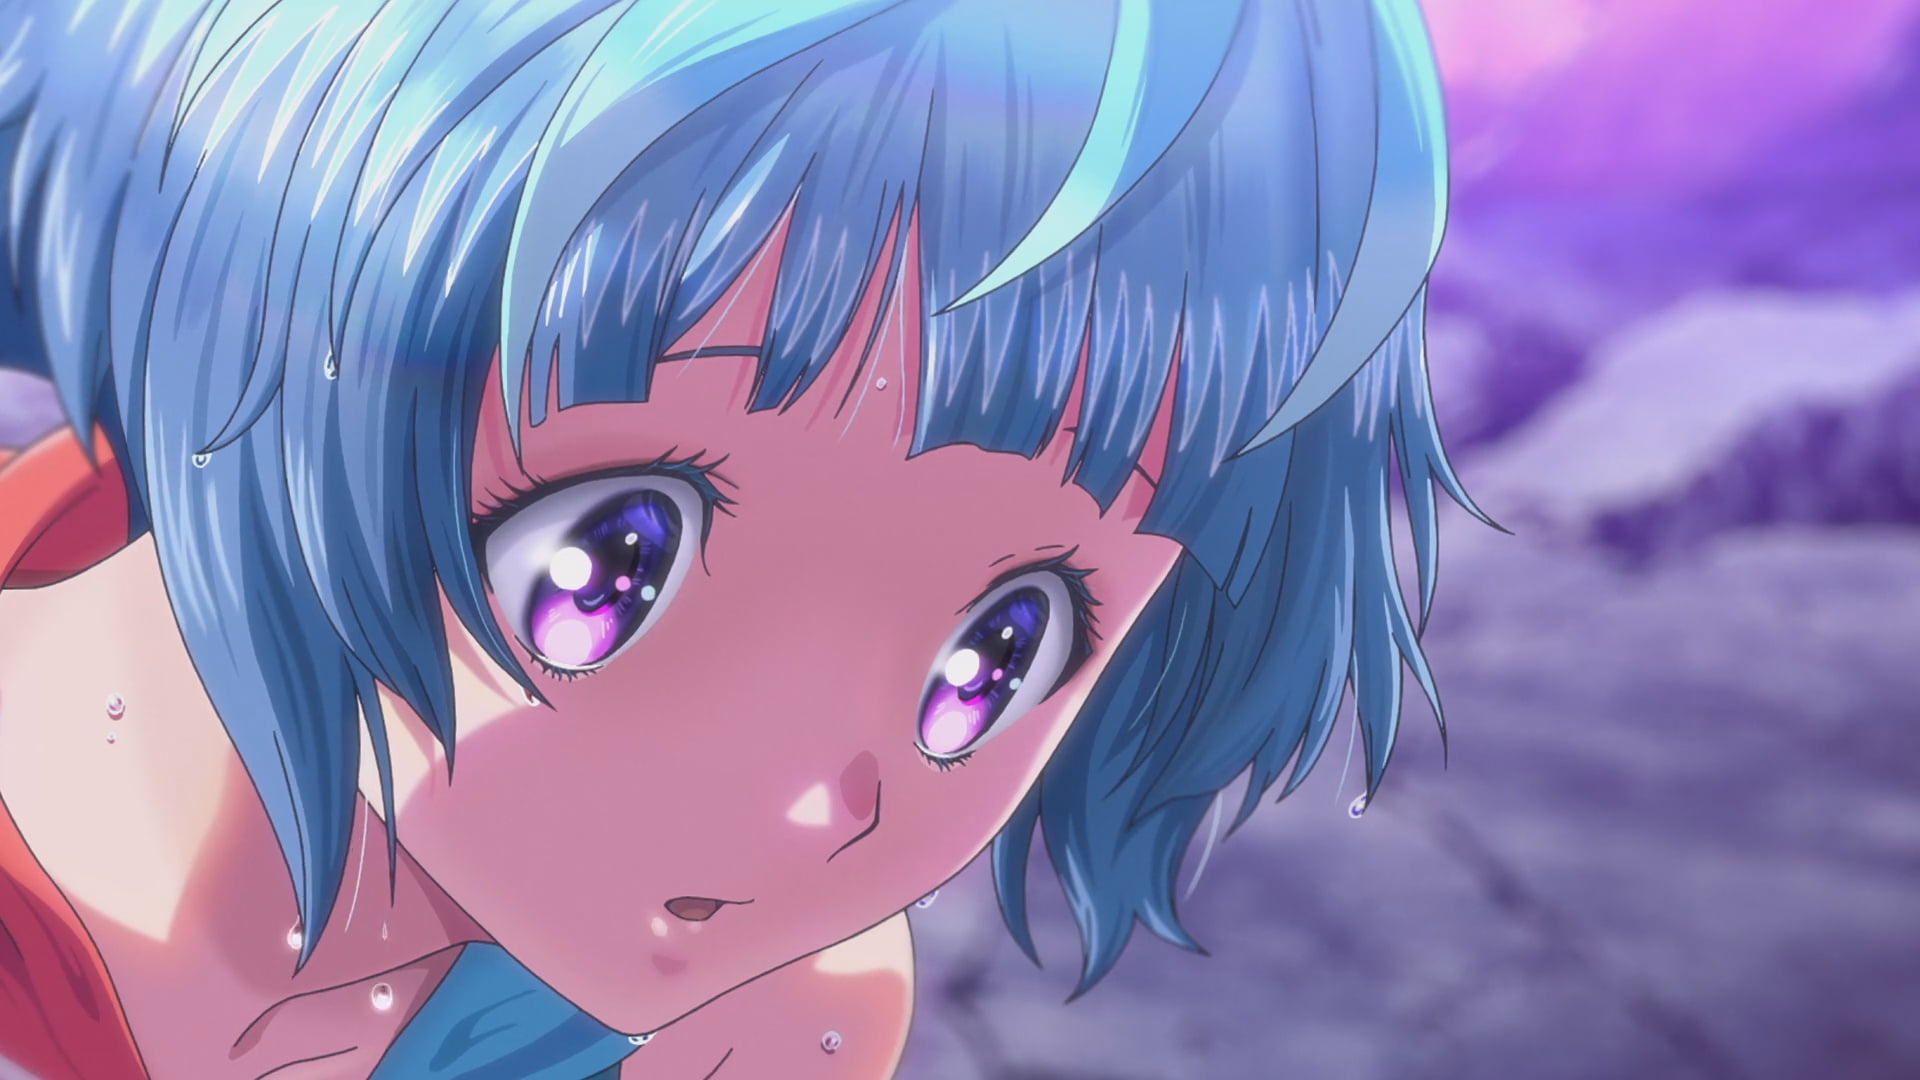 Bubble Anime Ending Explained Is Uta Dead or Alive